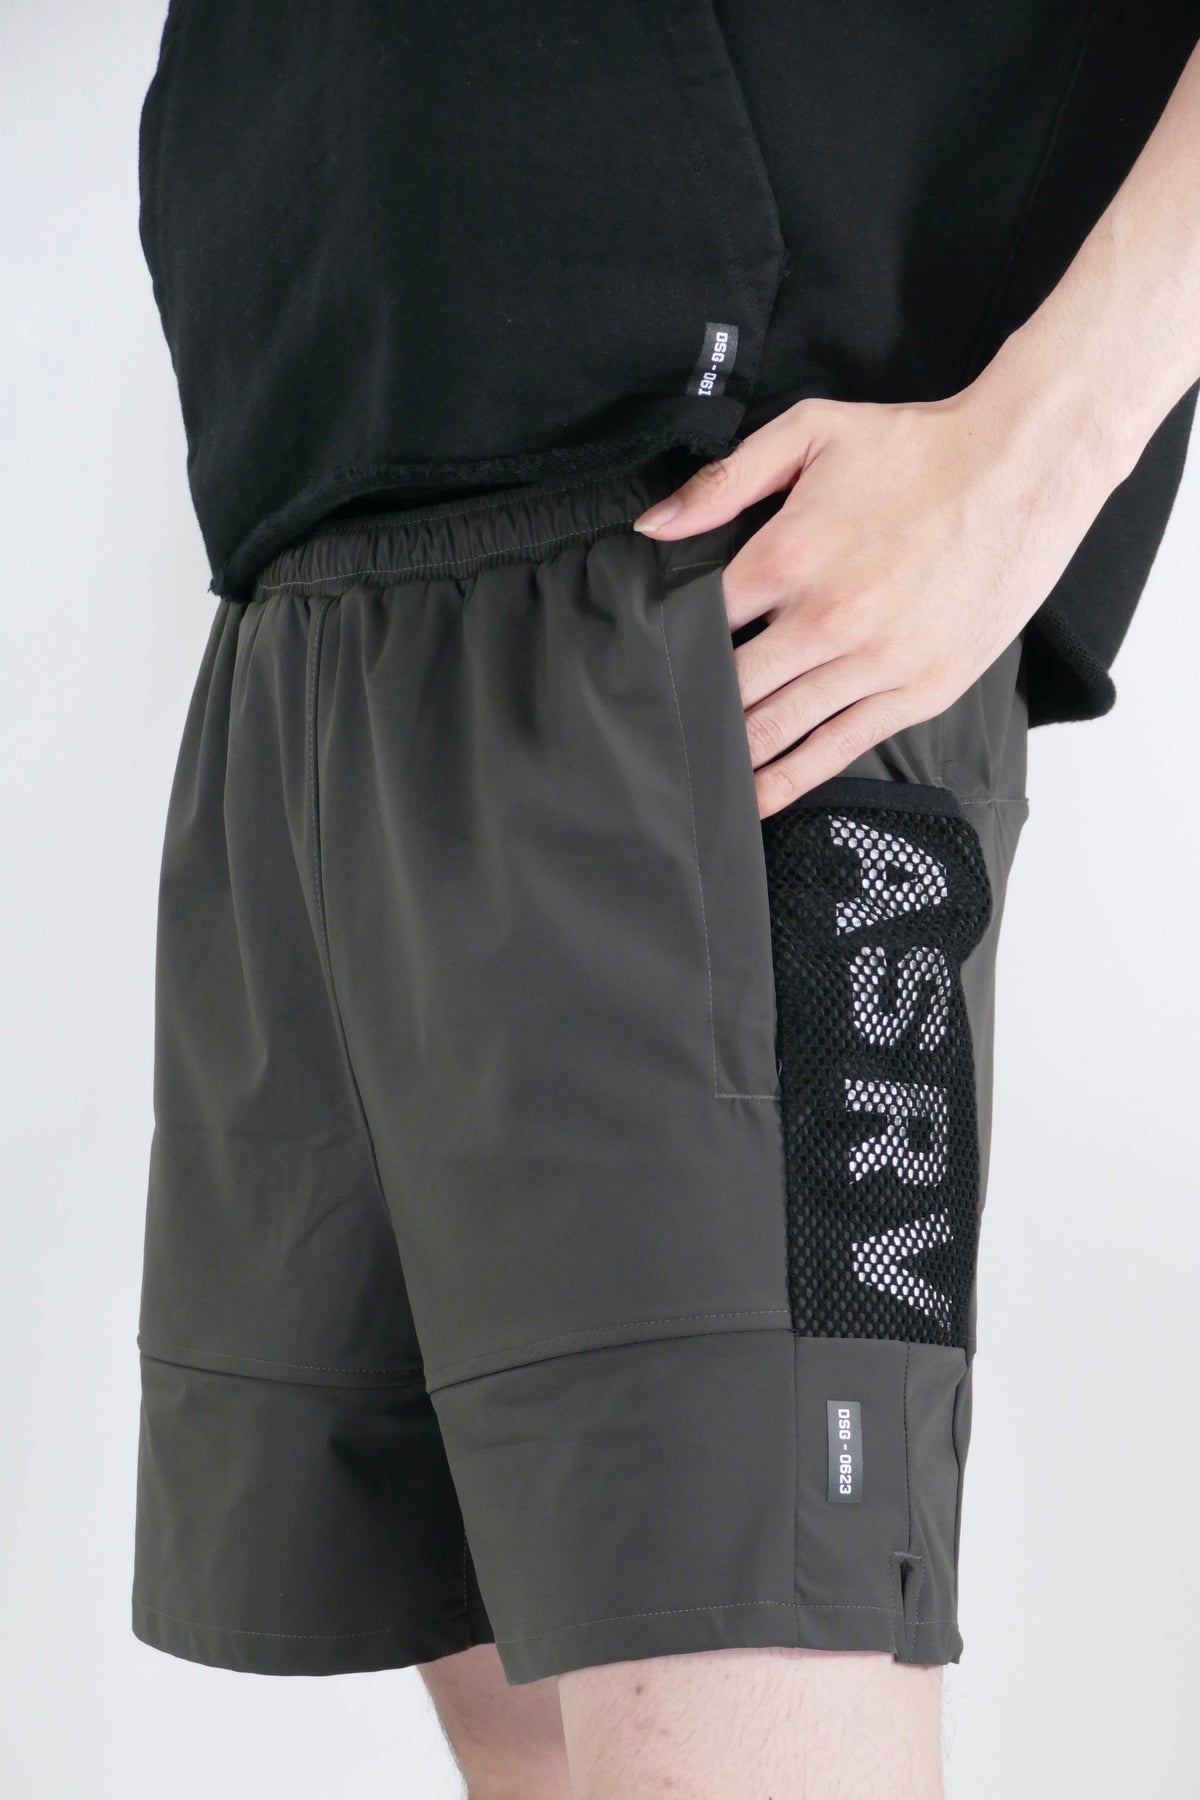 ASRV TETRA-LITE Adventure Shorts - Space Grey